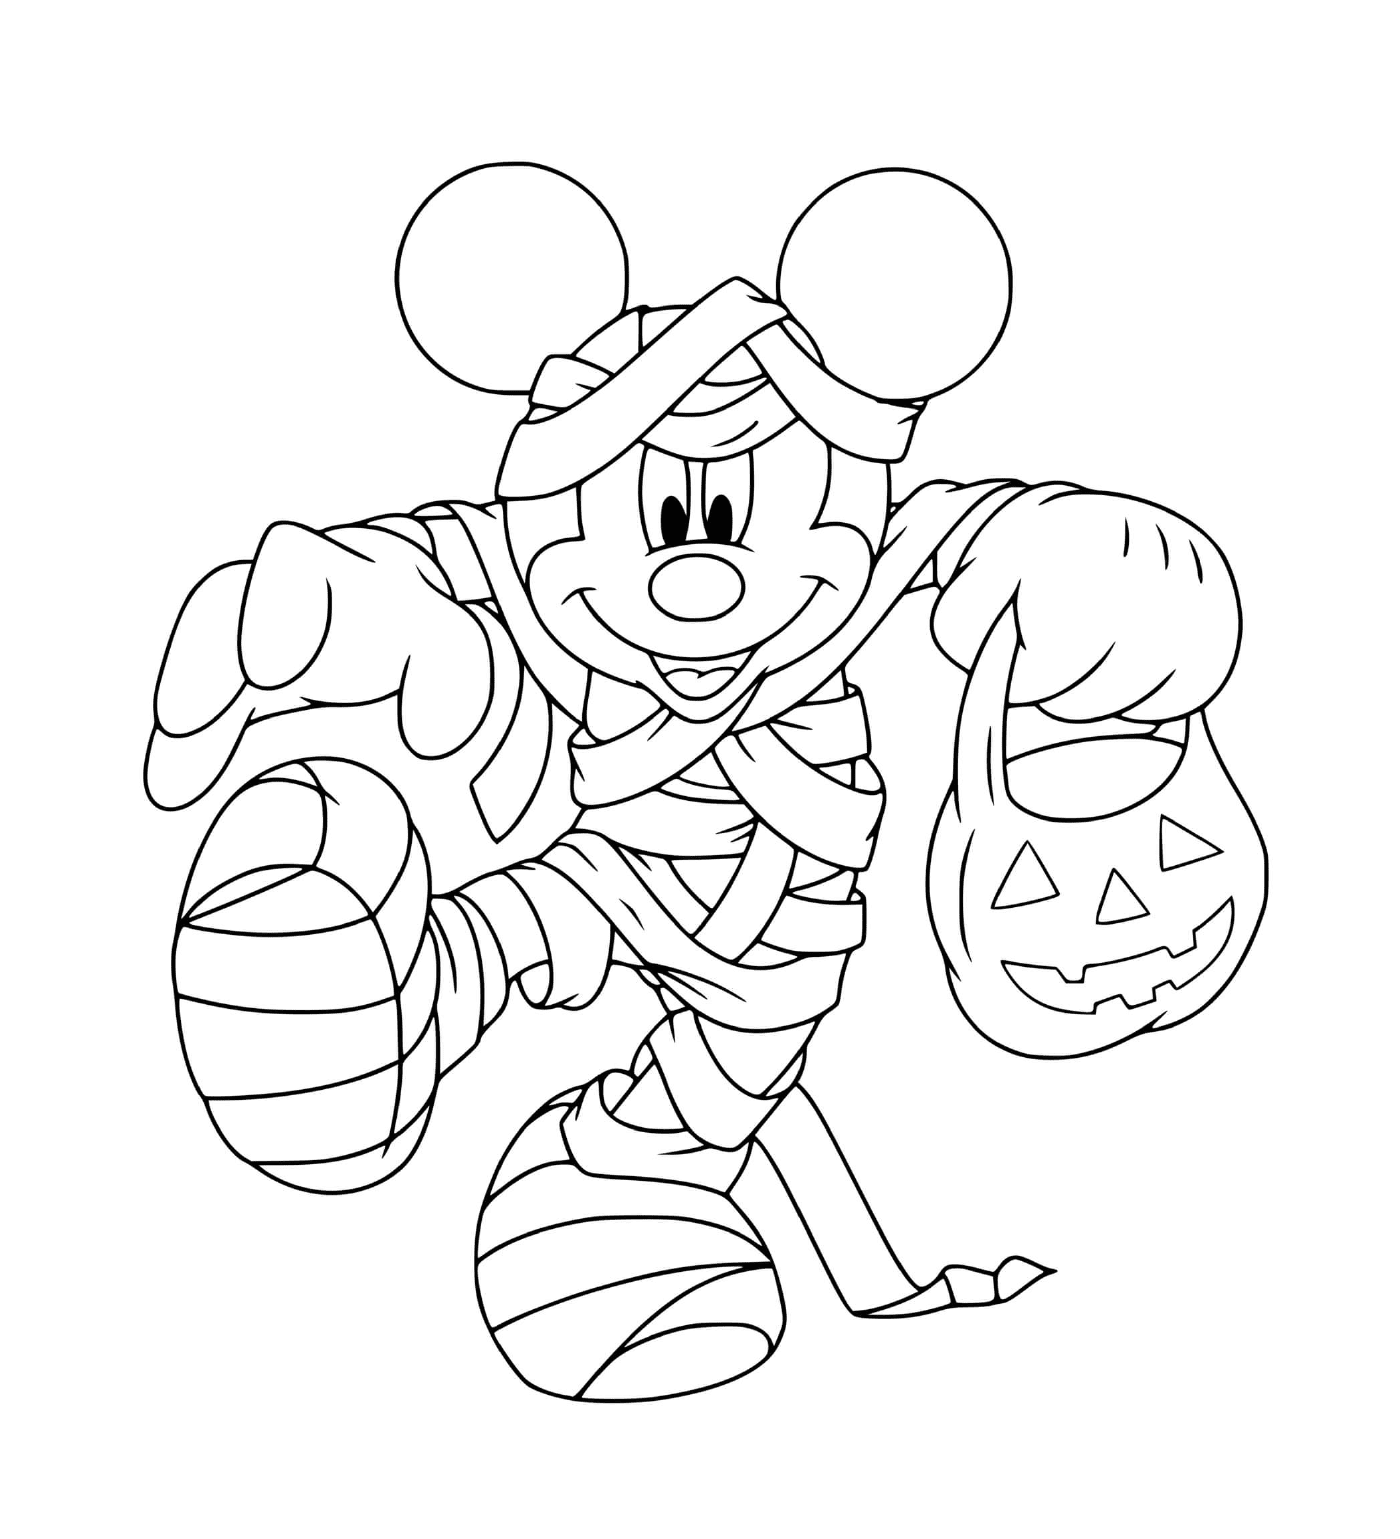  Mickey Mouse en traje de miedo 